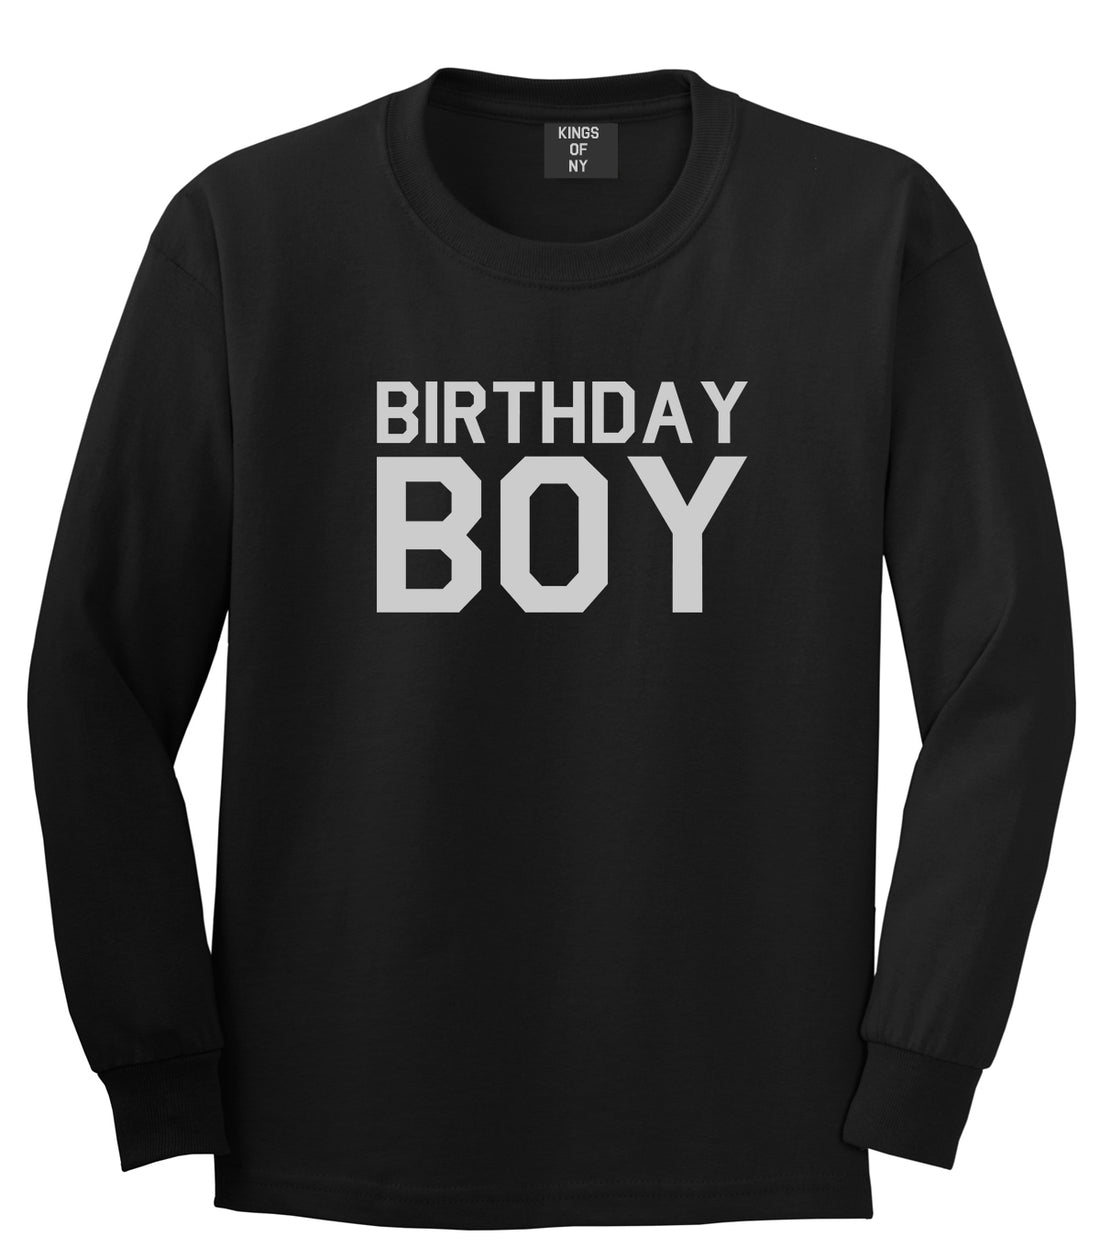 Birthday Boy Black Long Sleeve T-Shirt by Kings Of NY